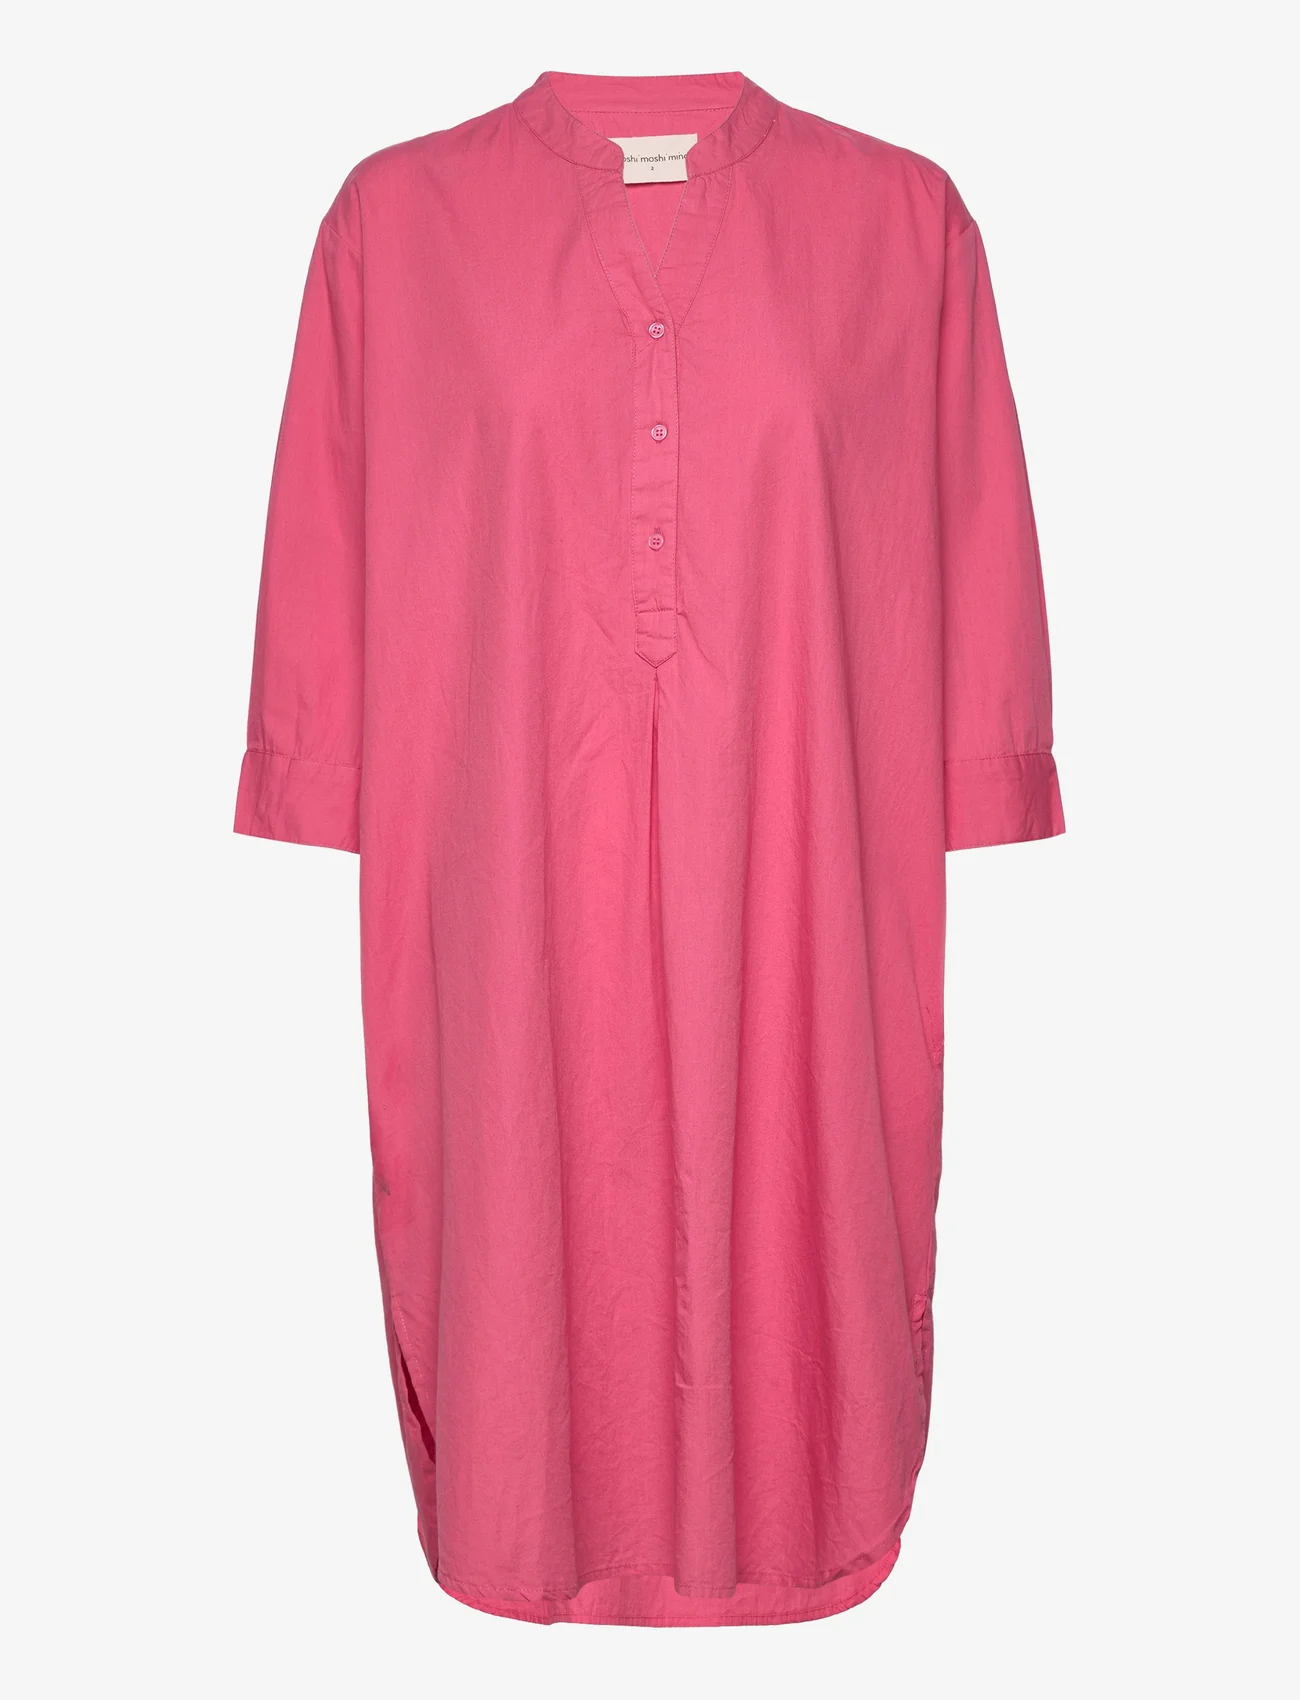 Moshi Moshi Mind - kate shirtdress poplin - shirt dresses - pink - 0